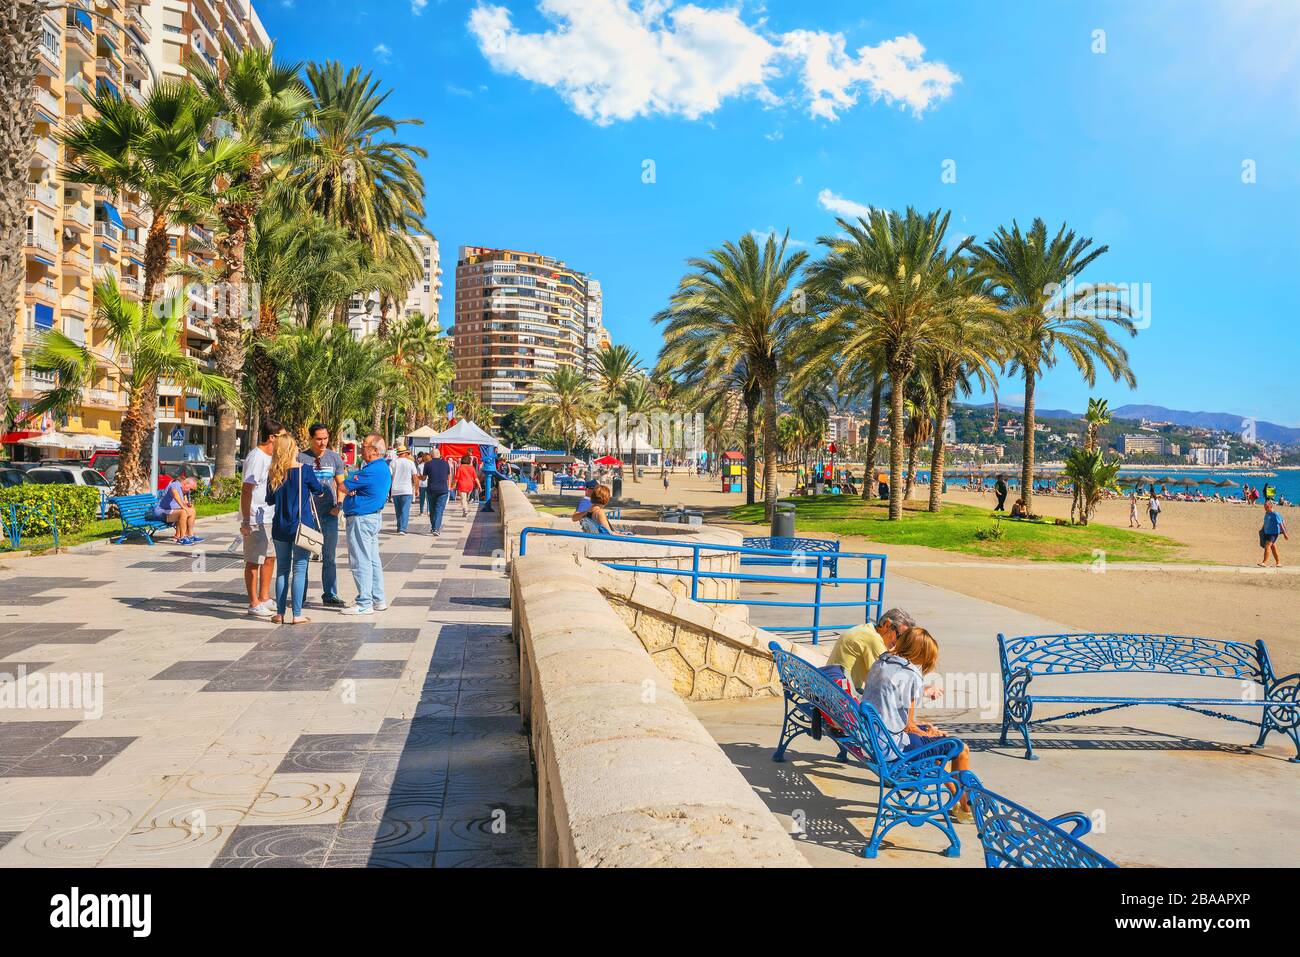 View of Paseo Maritimo seaside promenade along Malagueta beach.Malaga, Spain Stock Photo